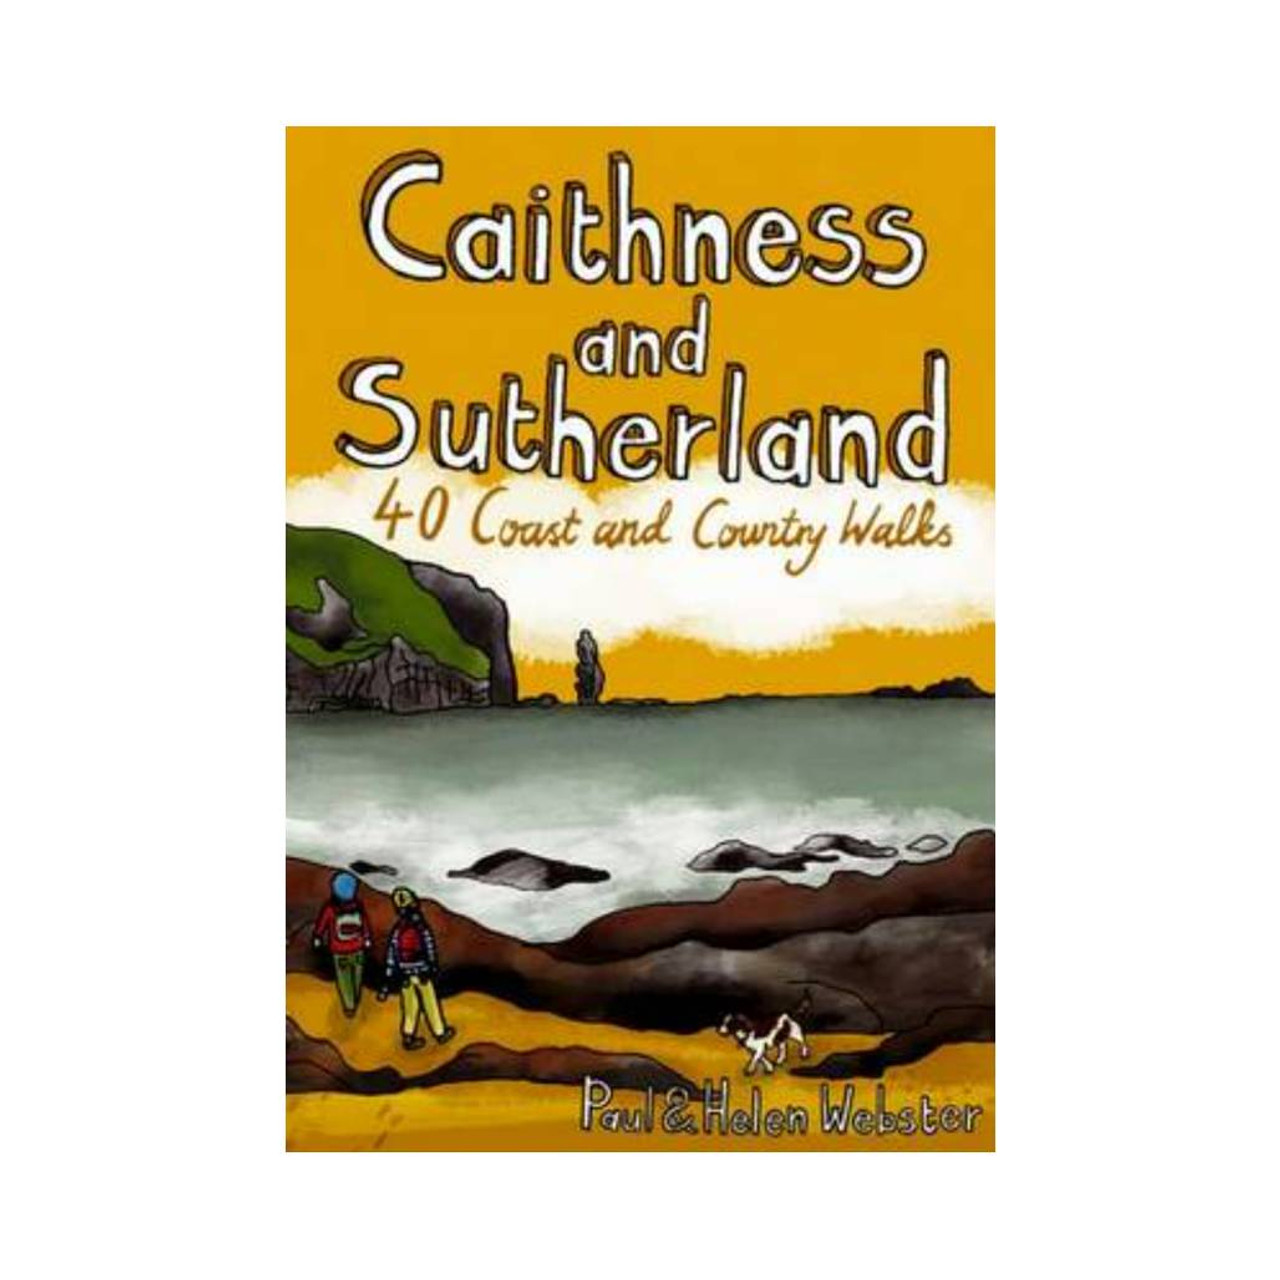 Caithness And Sutherland: 40 CoastandCountry Walks